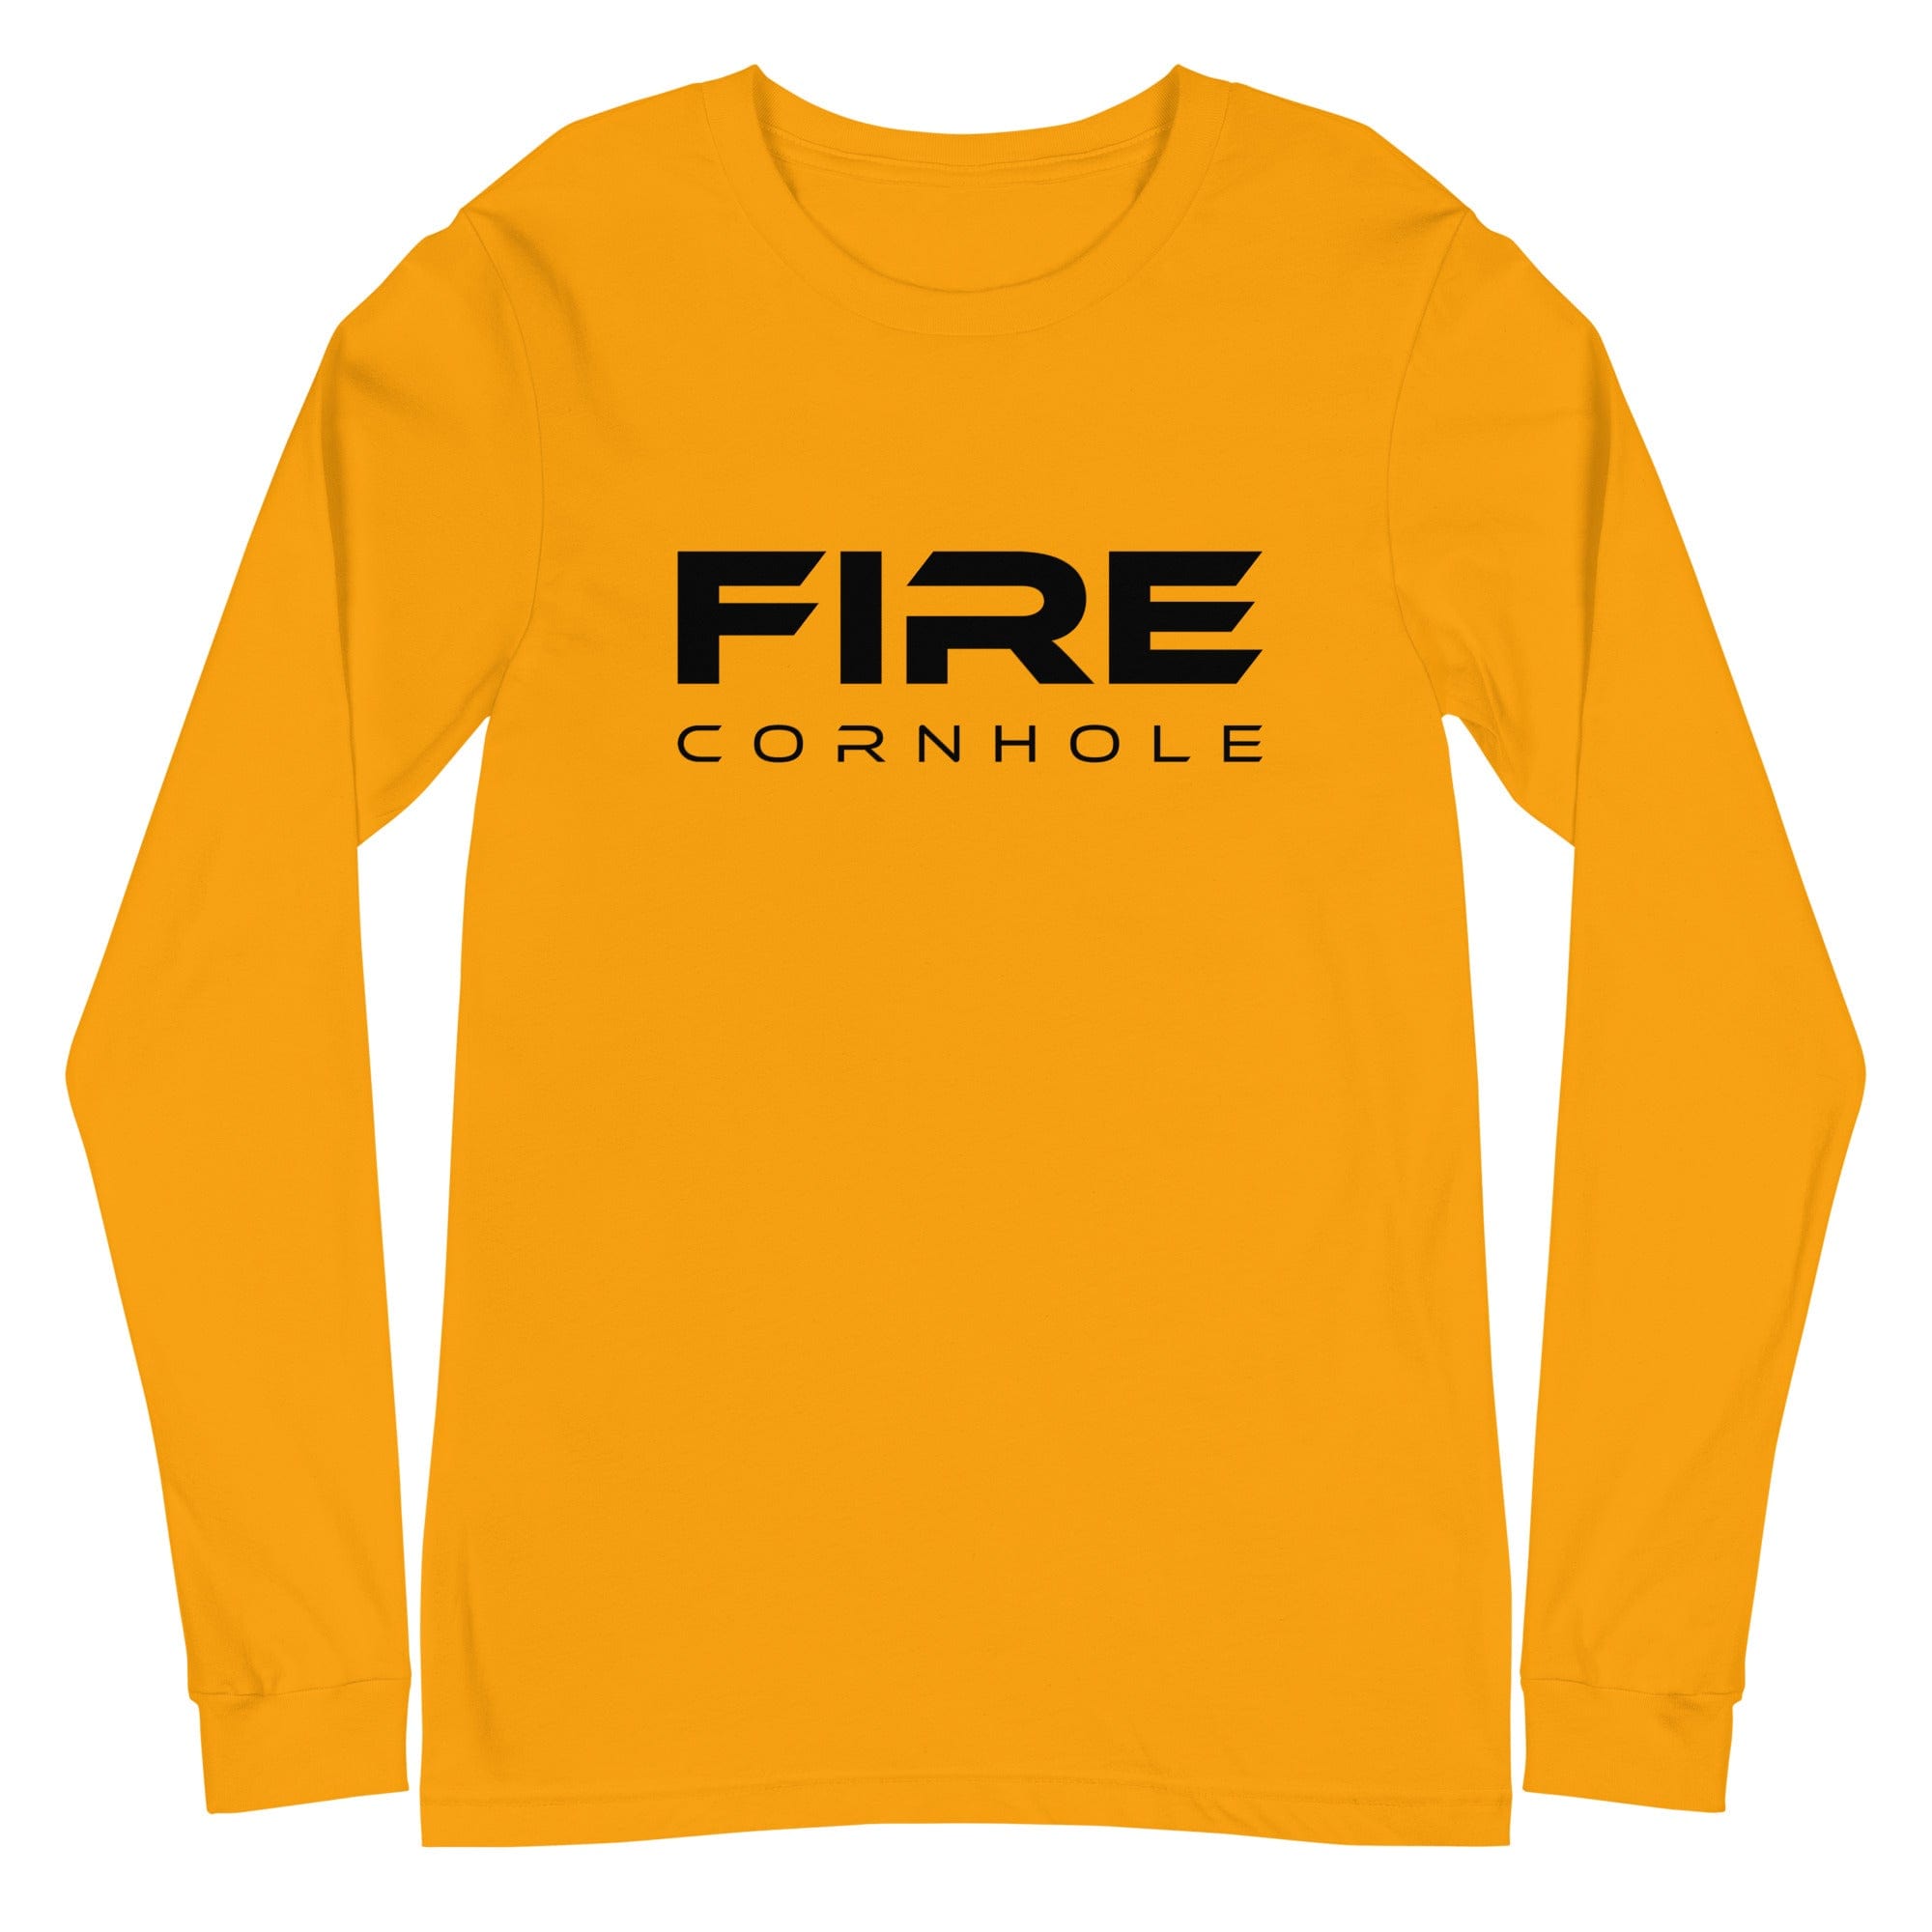 Yellow unisex cotton longsleeve shirt with Fire Cornhole logo in black